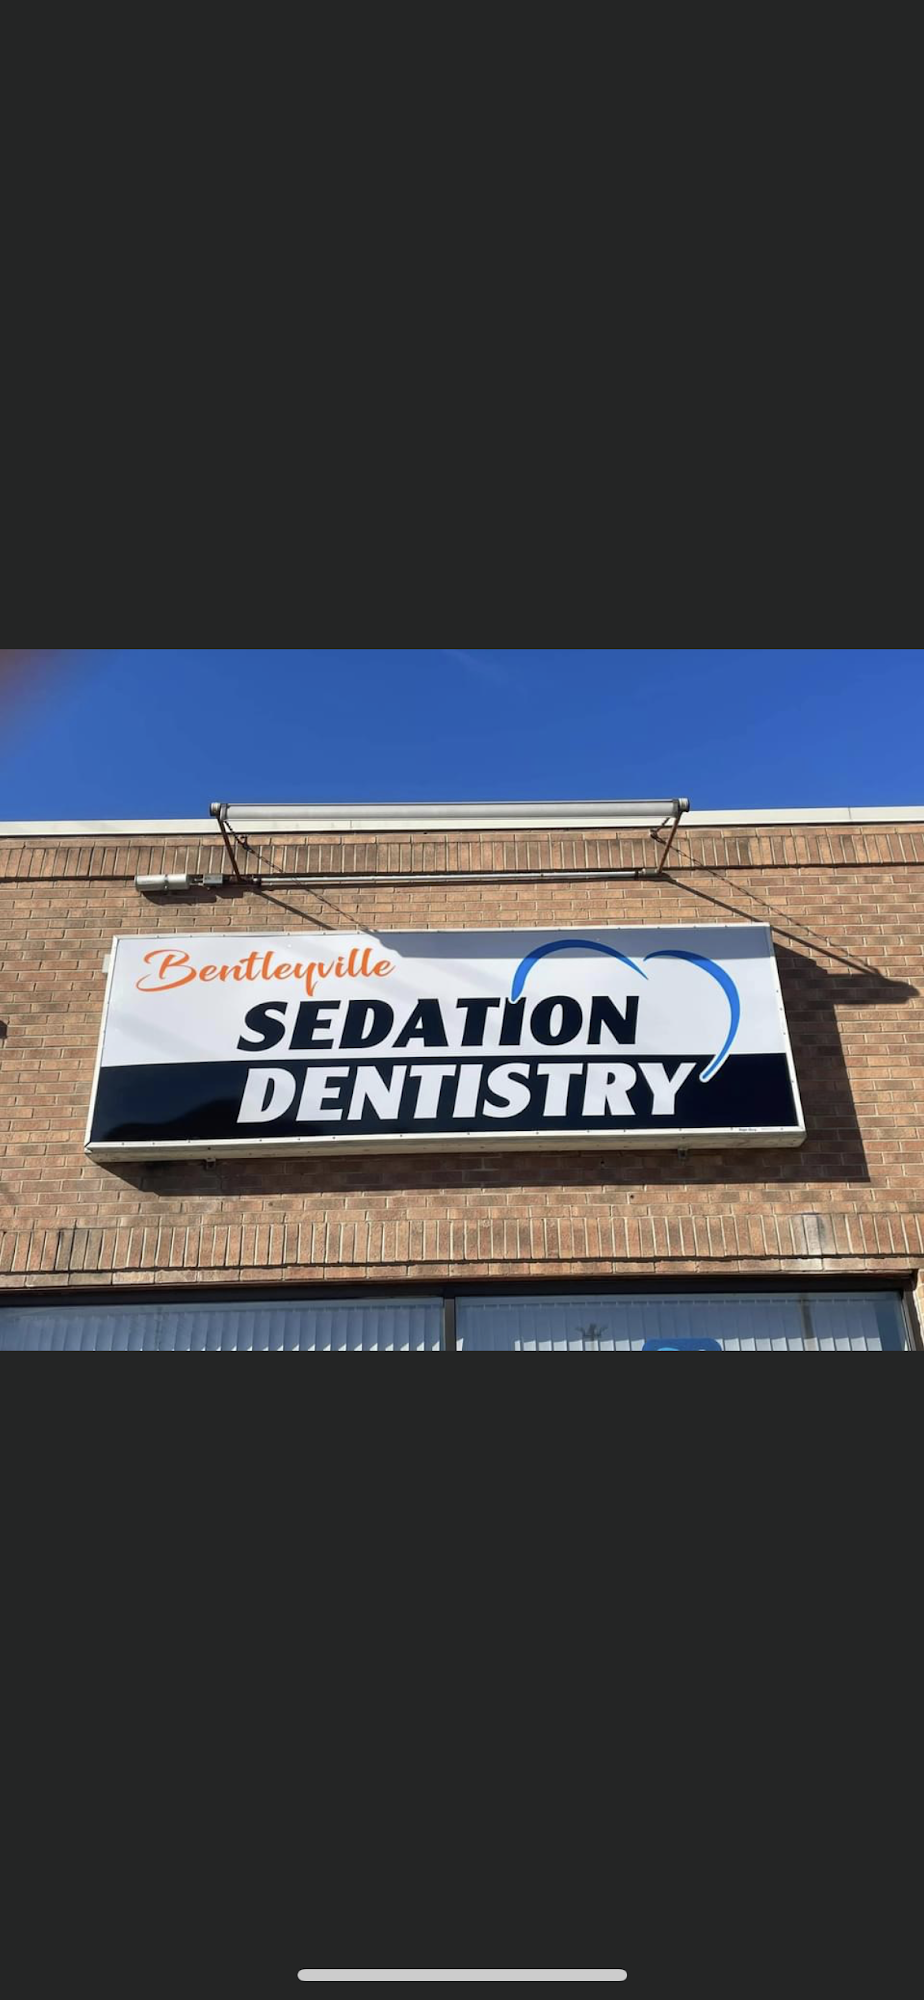 Bentleyville Sedation Dentistry 147 Wilson Rd, Bentleyville Pennsylvania 15314